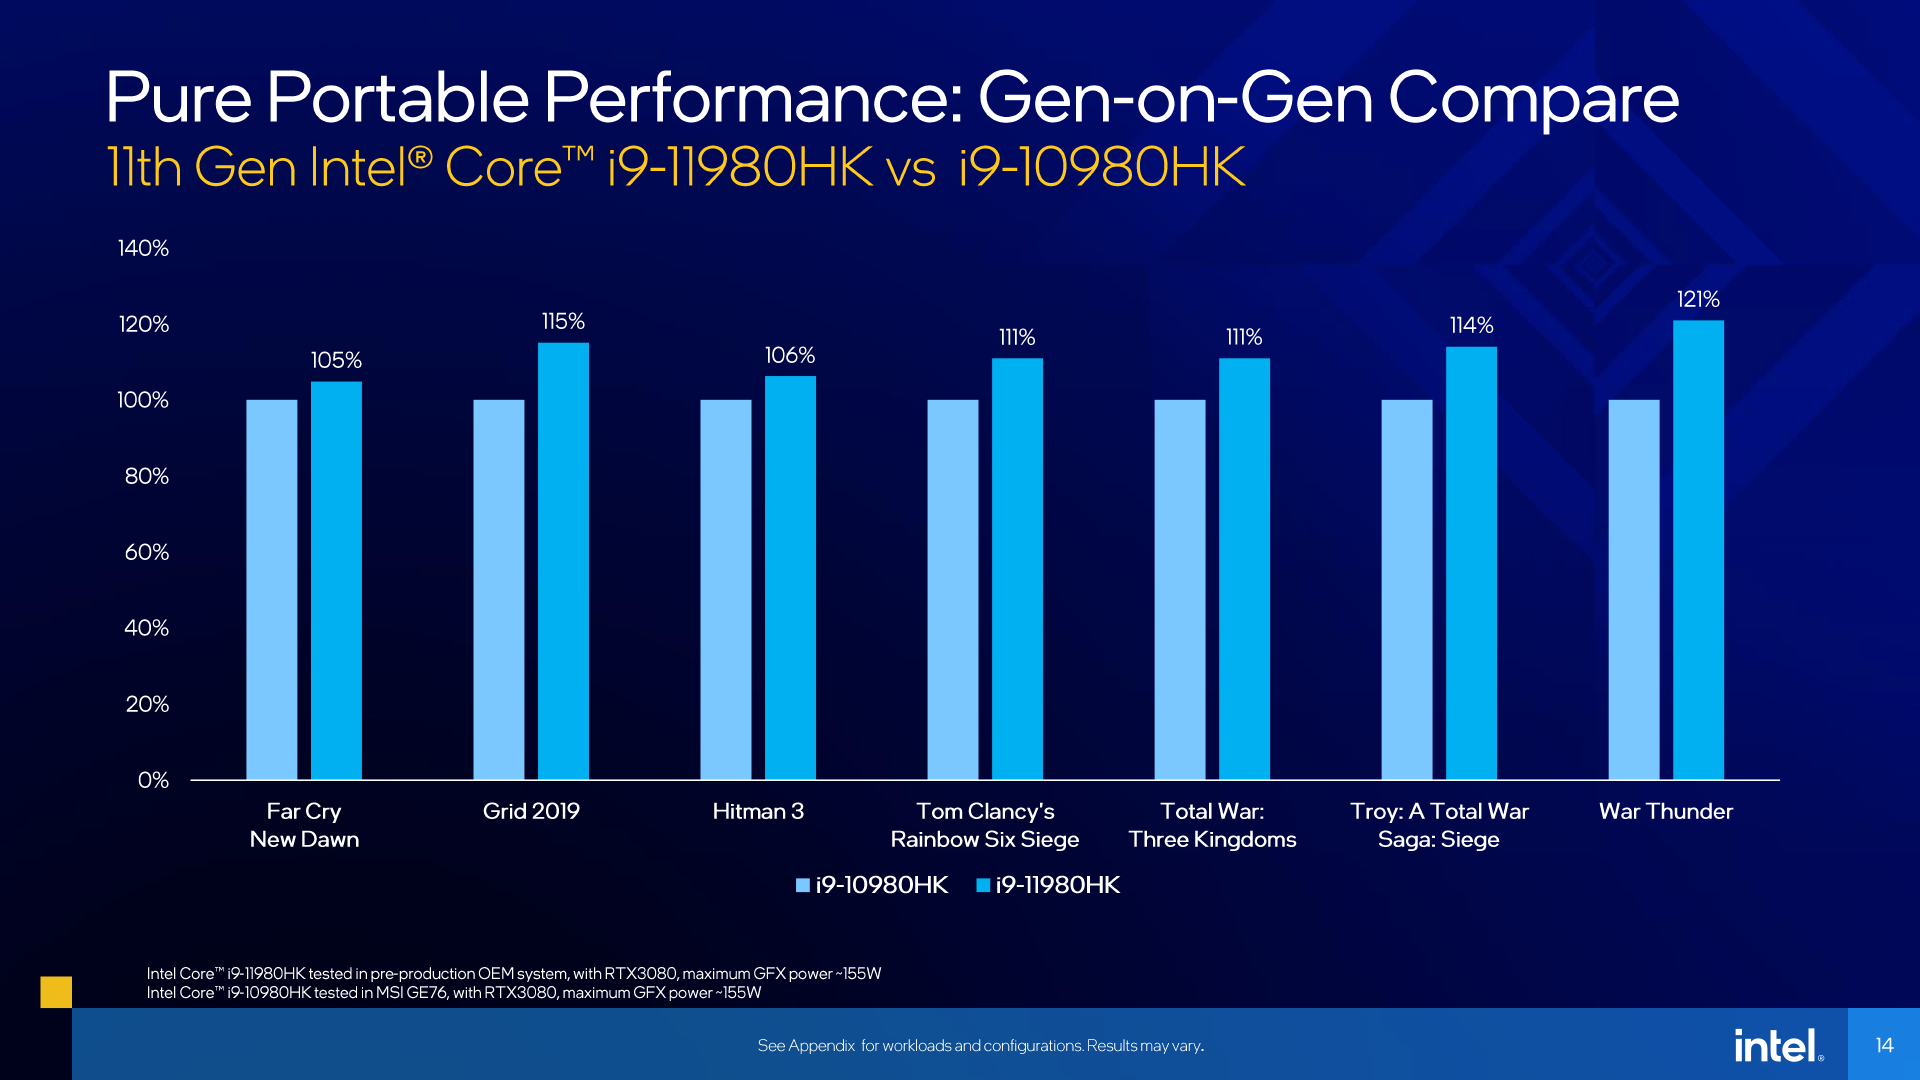 Tiger Lake-H 11th Gen Intel Core H-series processors